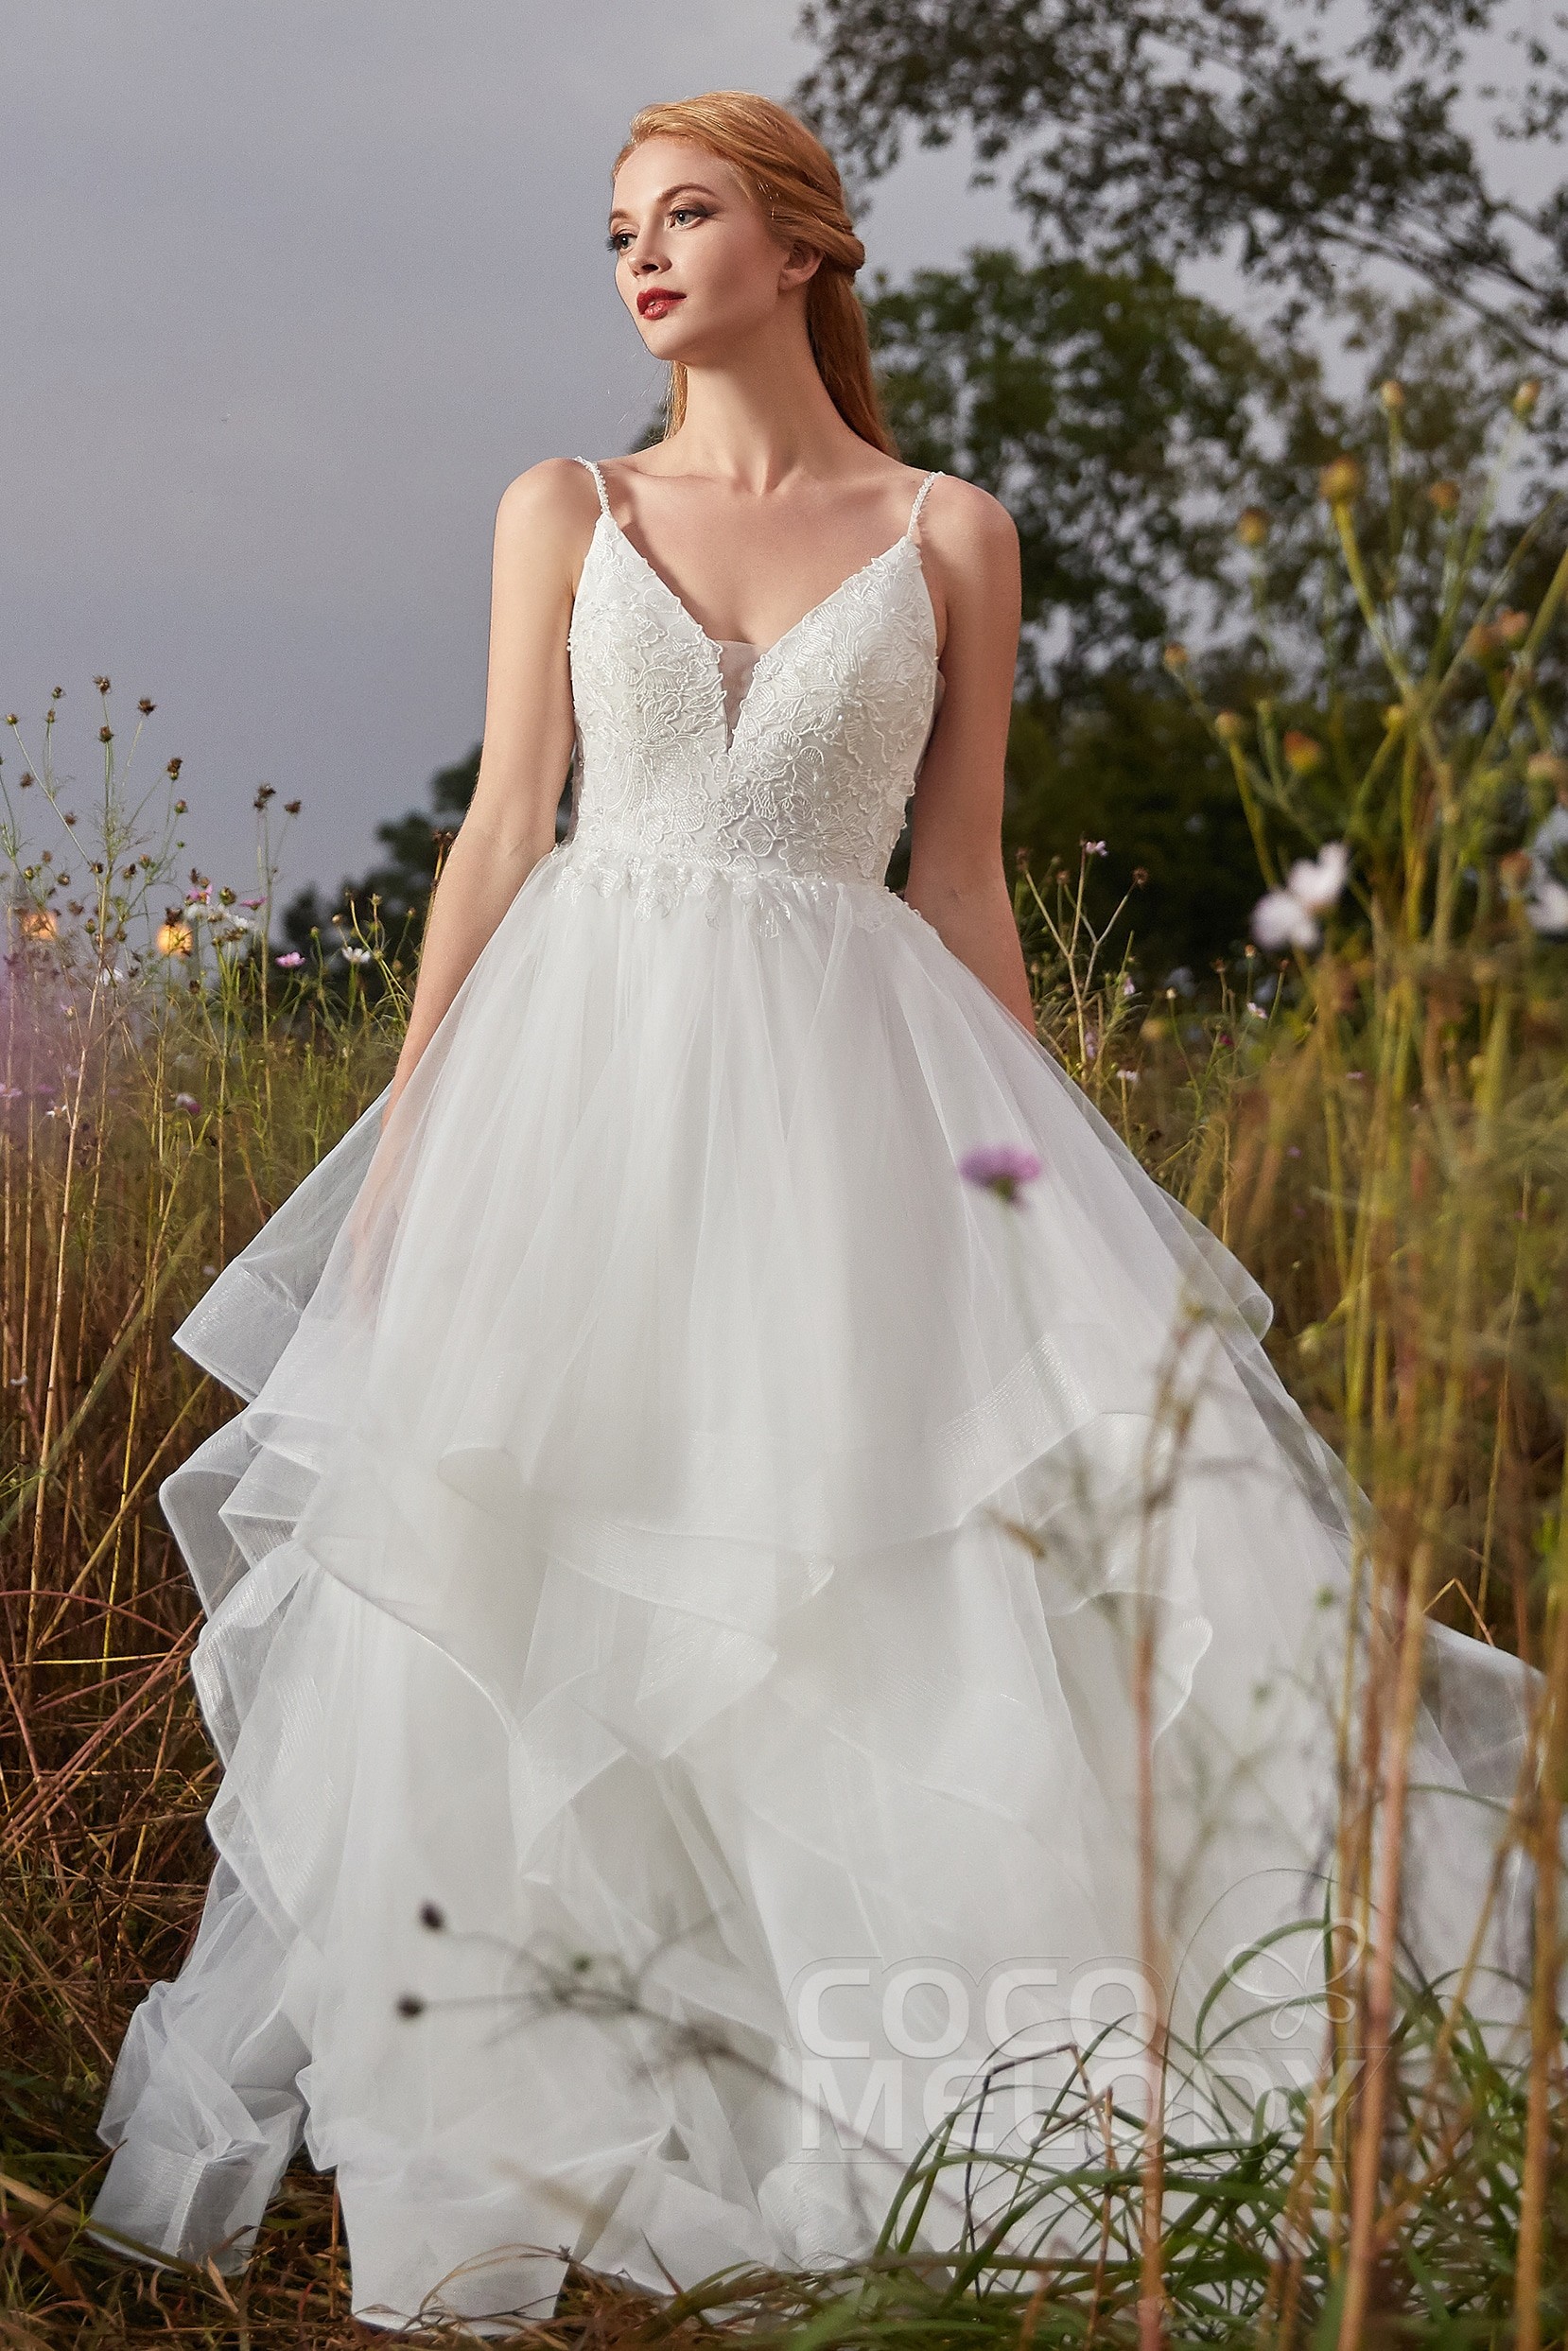 Silhouette Inspo for Your Dream Wedding Dress | Reading Bridal Outlet  Cincinnati